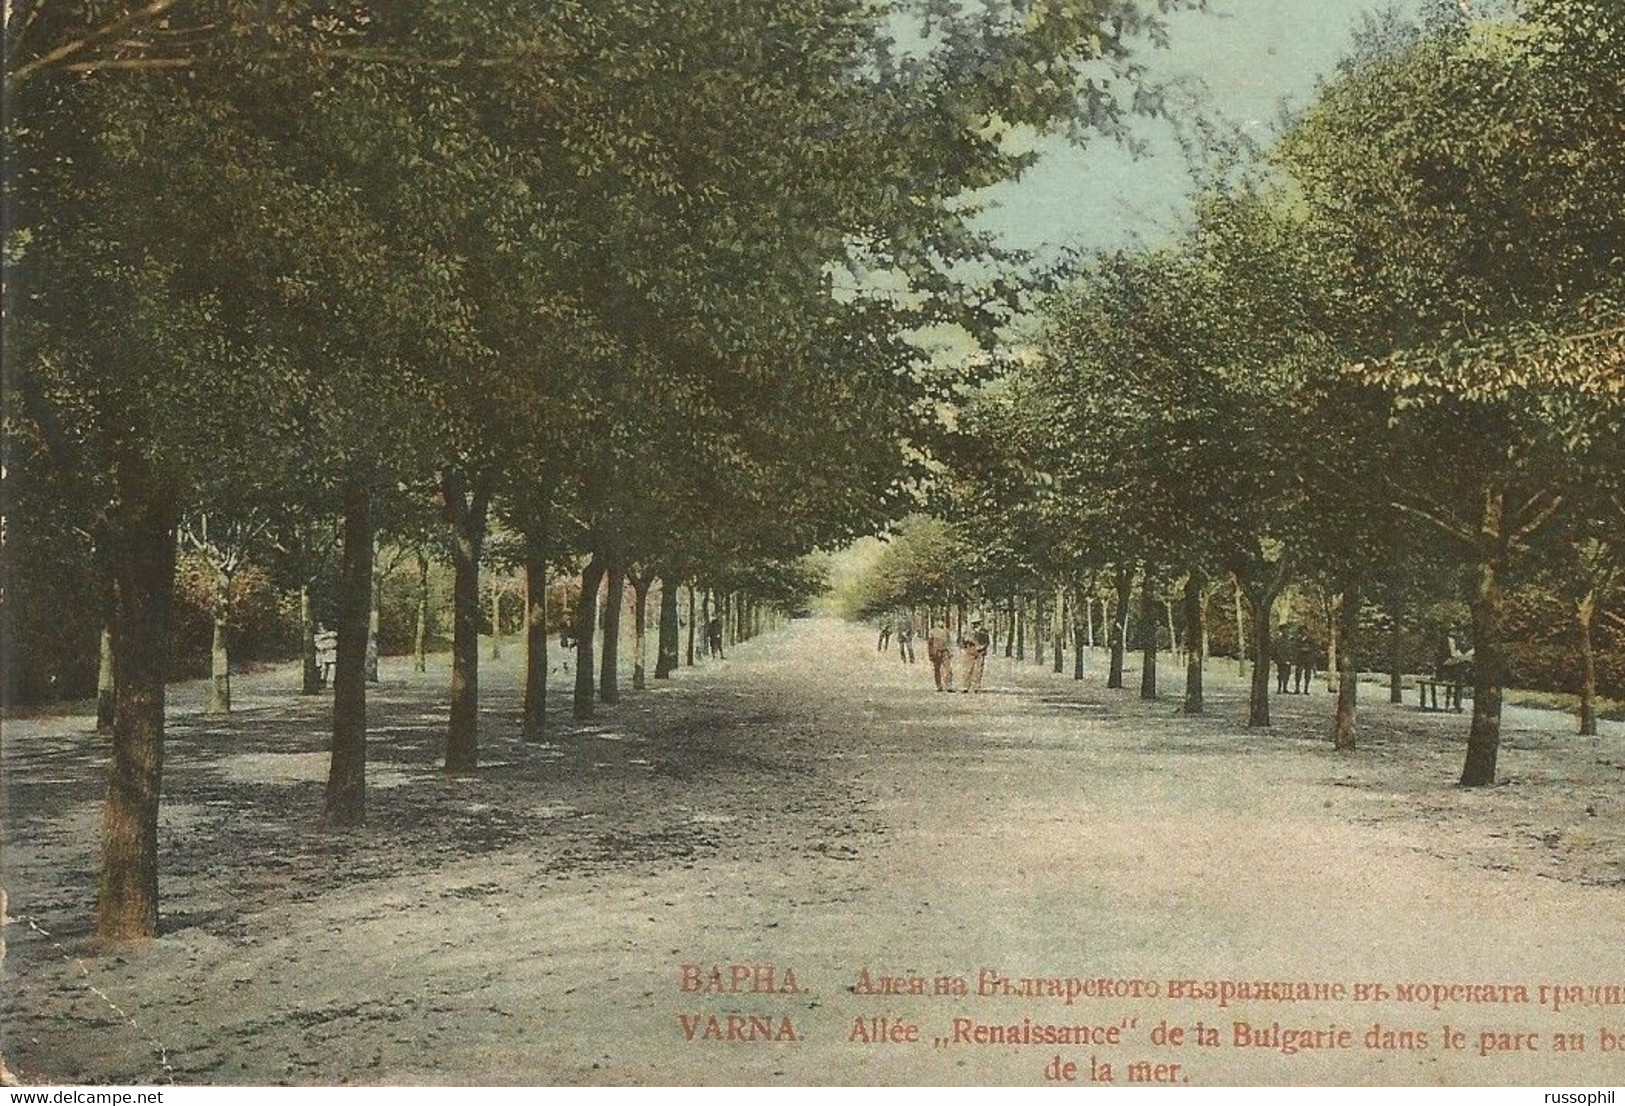 001048 - BULGARIA - VARNA - ALLEE "RENAISSANCE DE LA BULGARIE' DANS LE PARC AU BORD DE LA MER - ED. DIMITROV - 1911 - Bulgaria